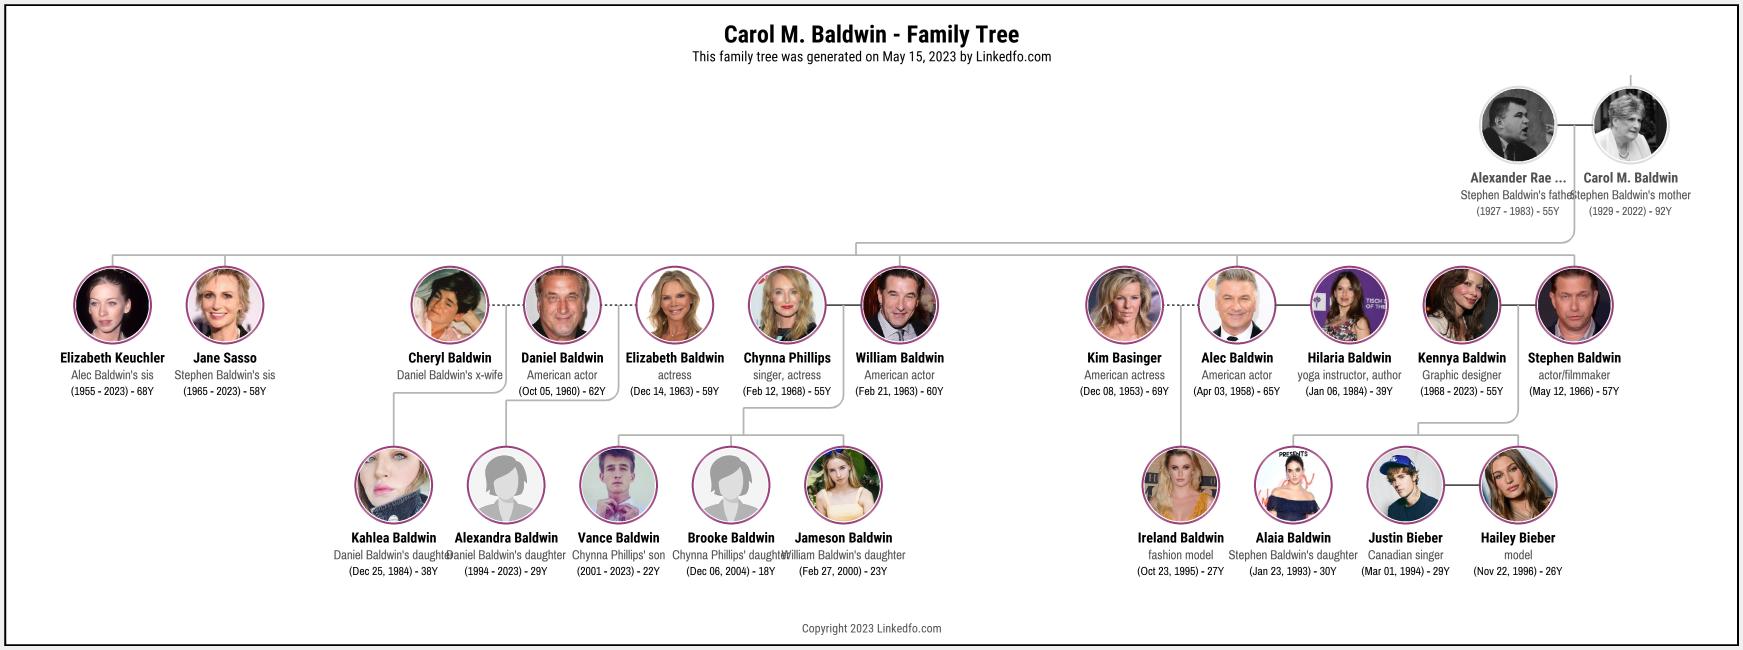 Carol M. Baldwin's Family Tree